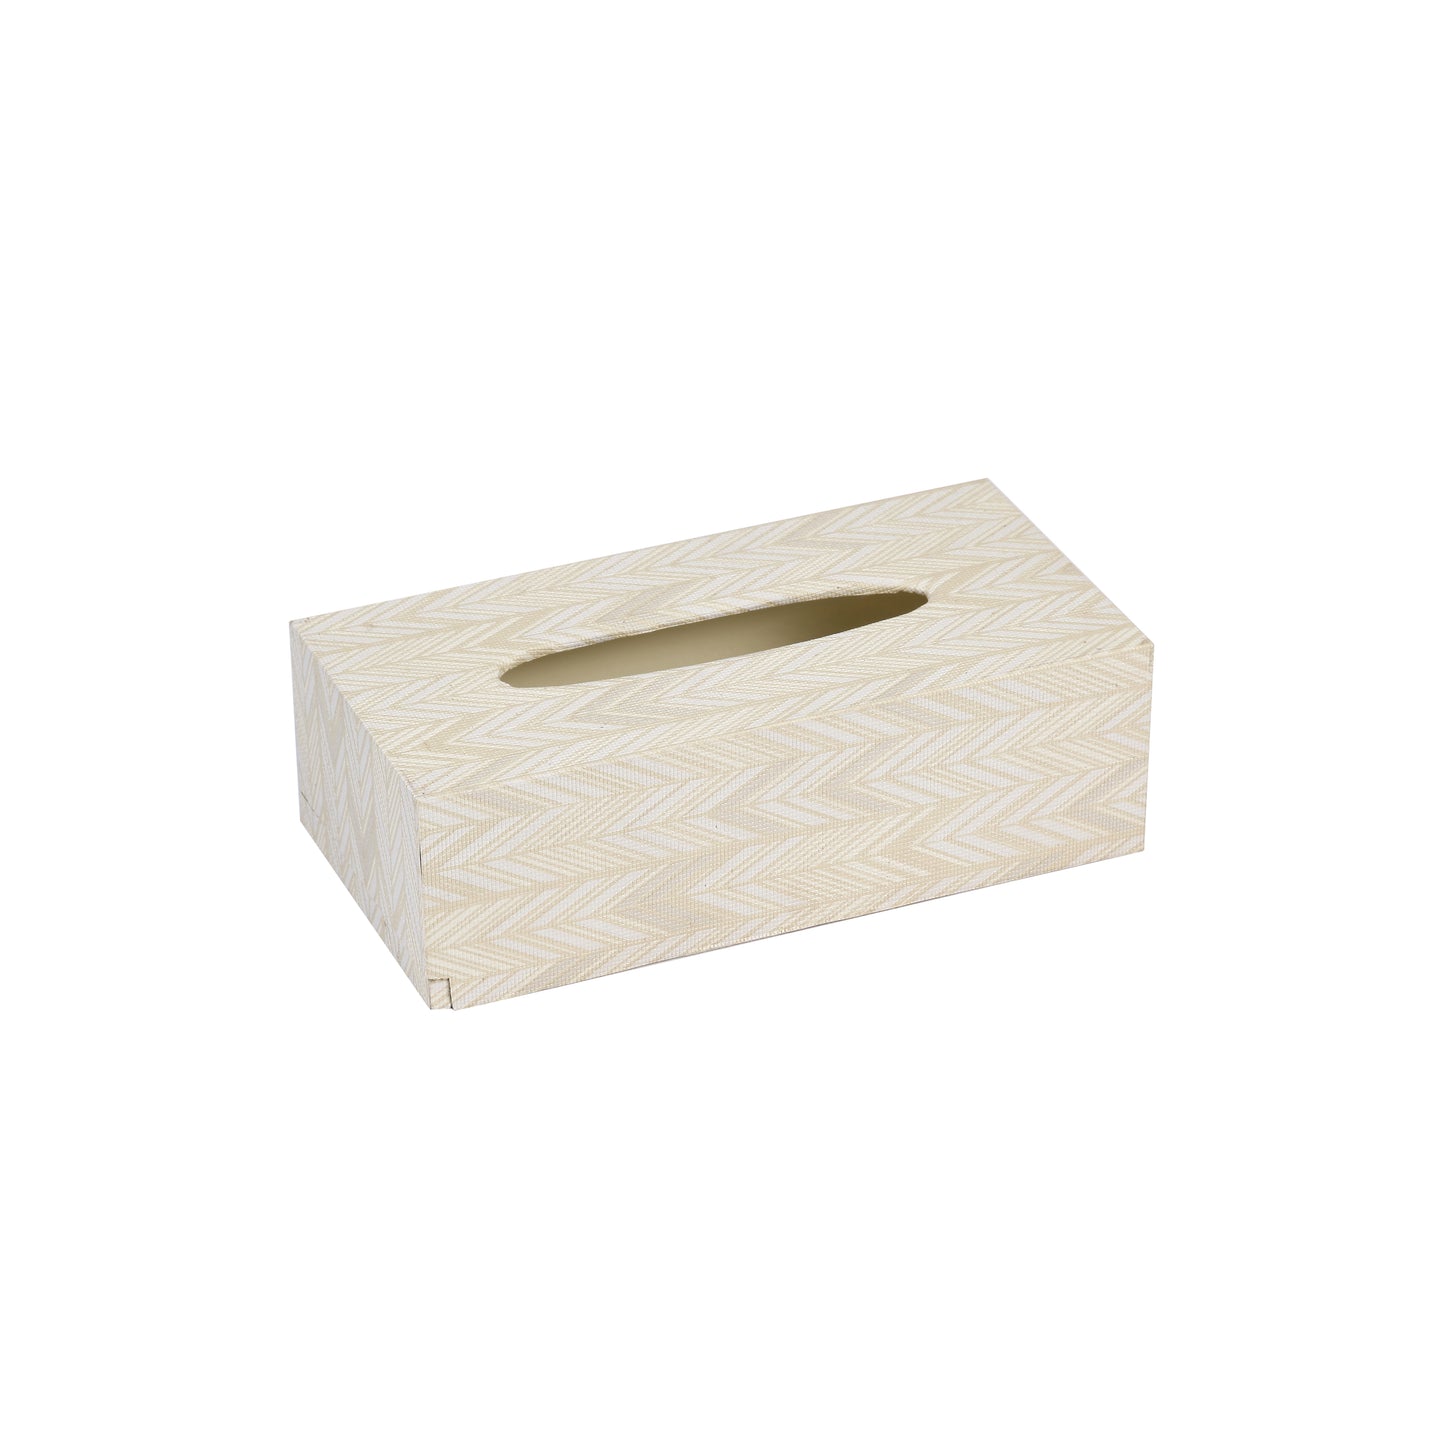 A Tiny Mistake Golden Herringbone Rectangle Tissue Box, 26 x 13 x 8 cm